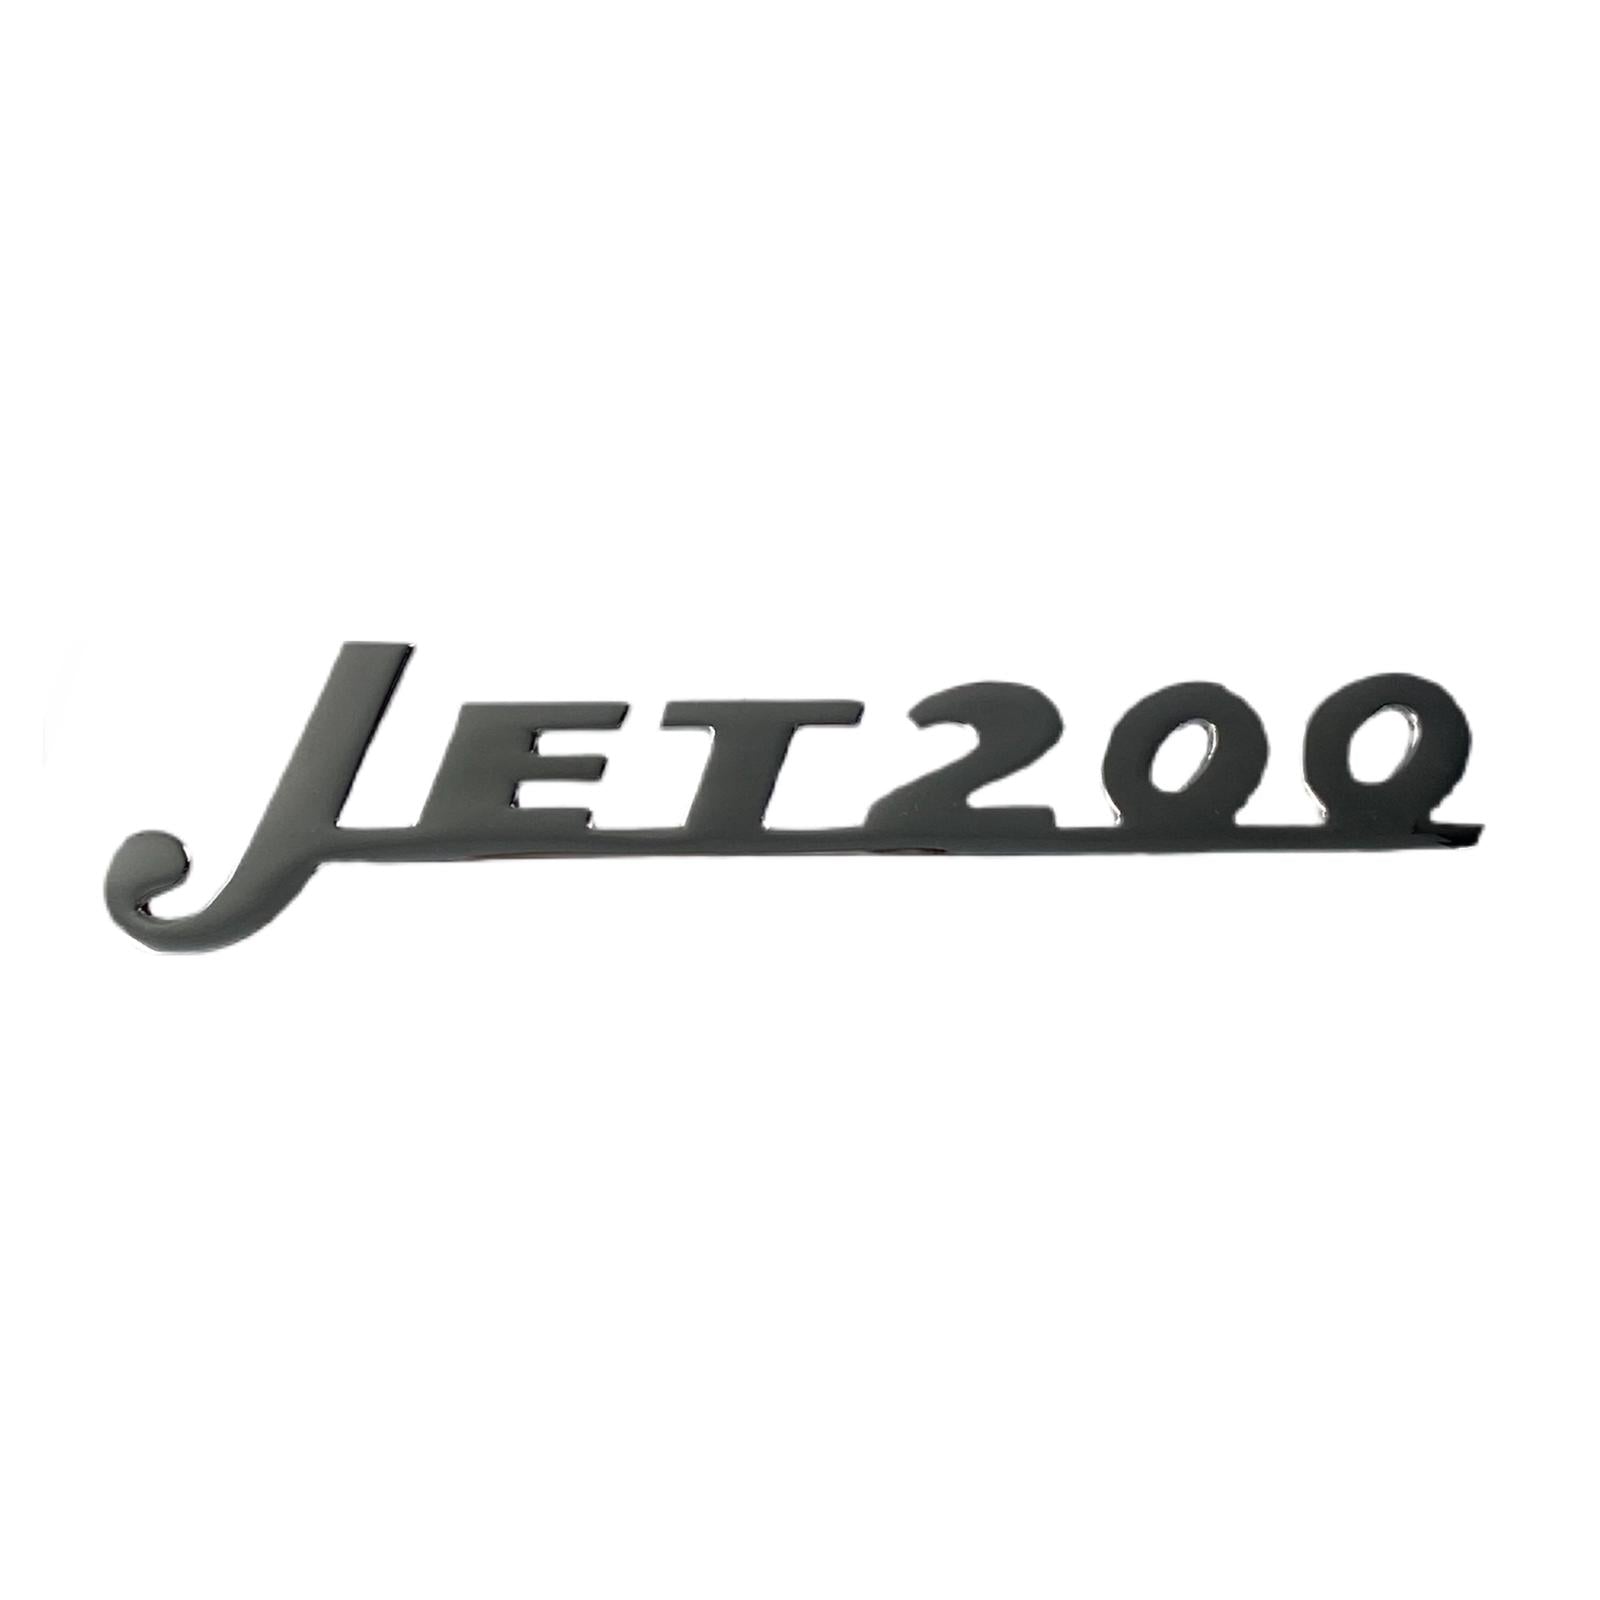 Lambretta Jet 200 Legshield Badge - Chrome